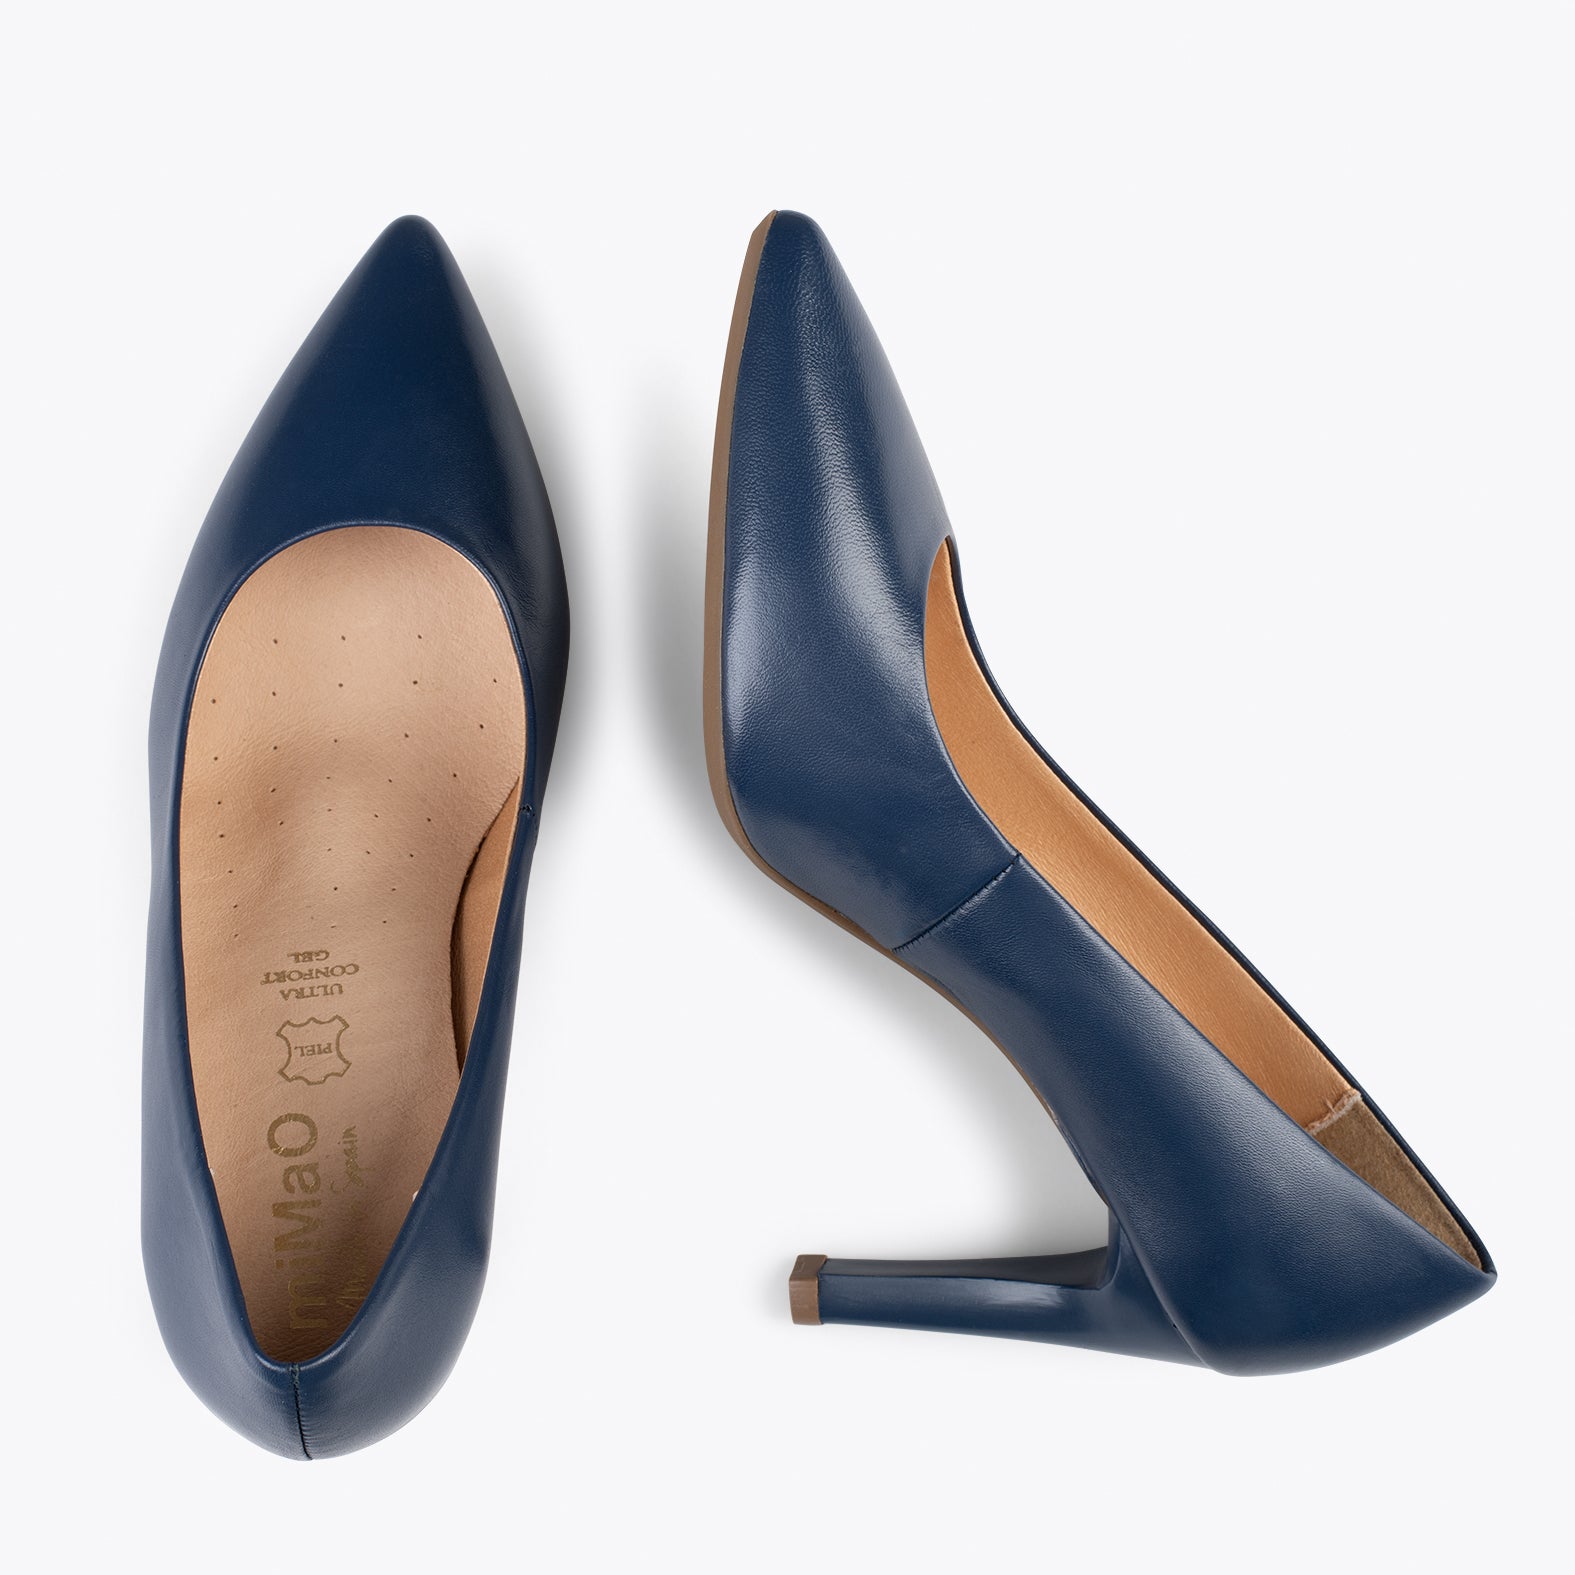 GLAM – NAVY elegant high heels